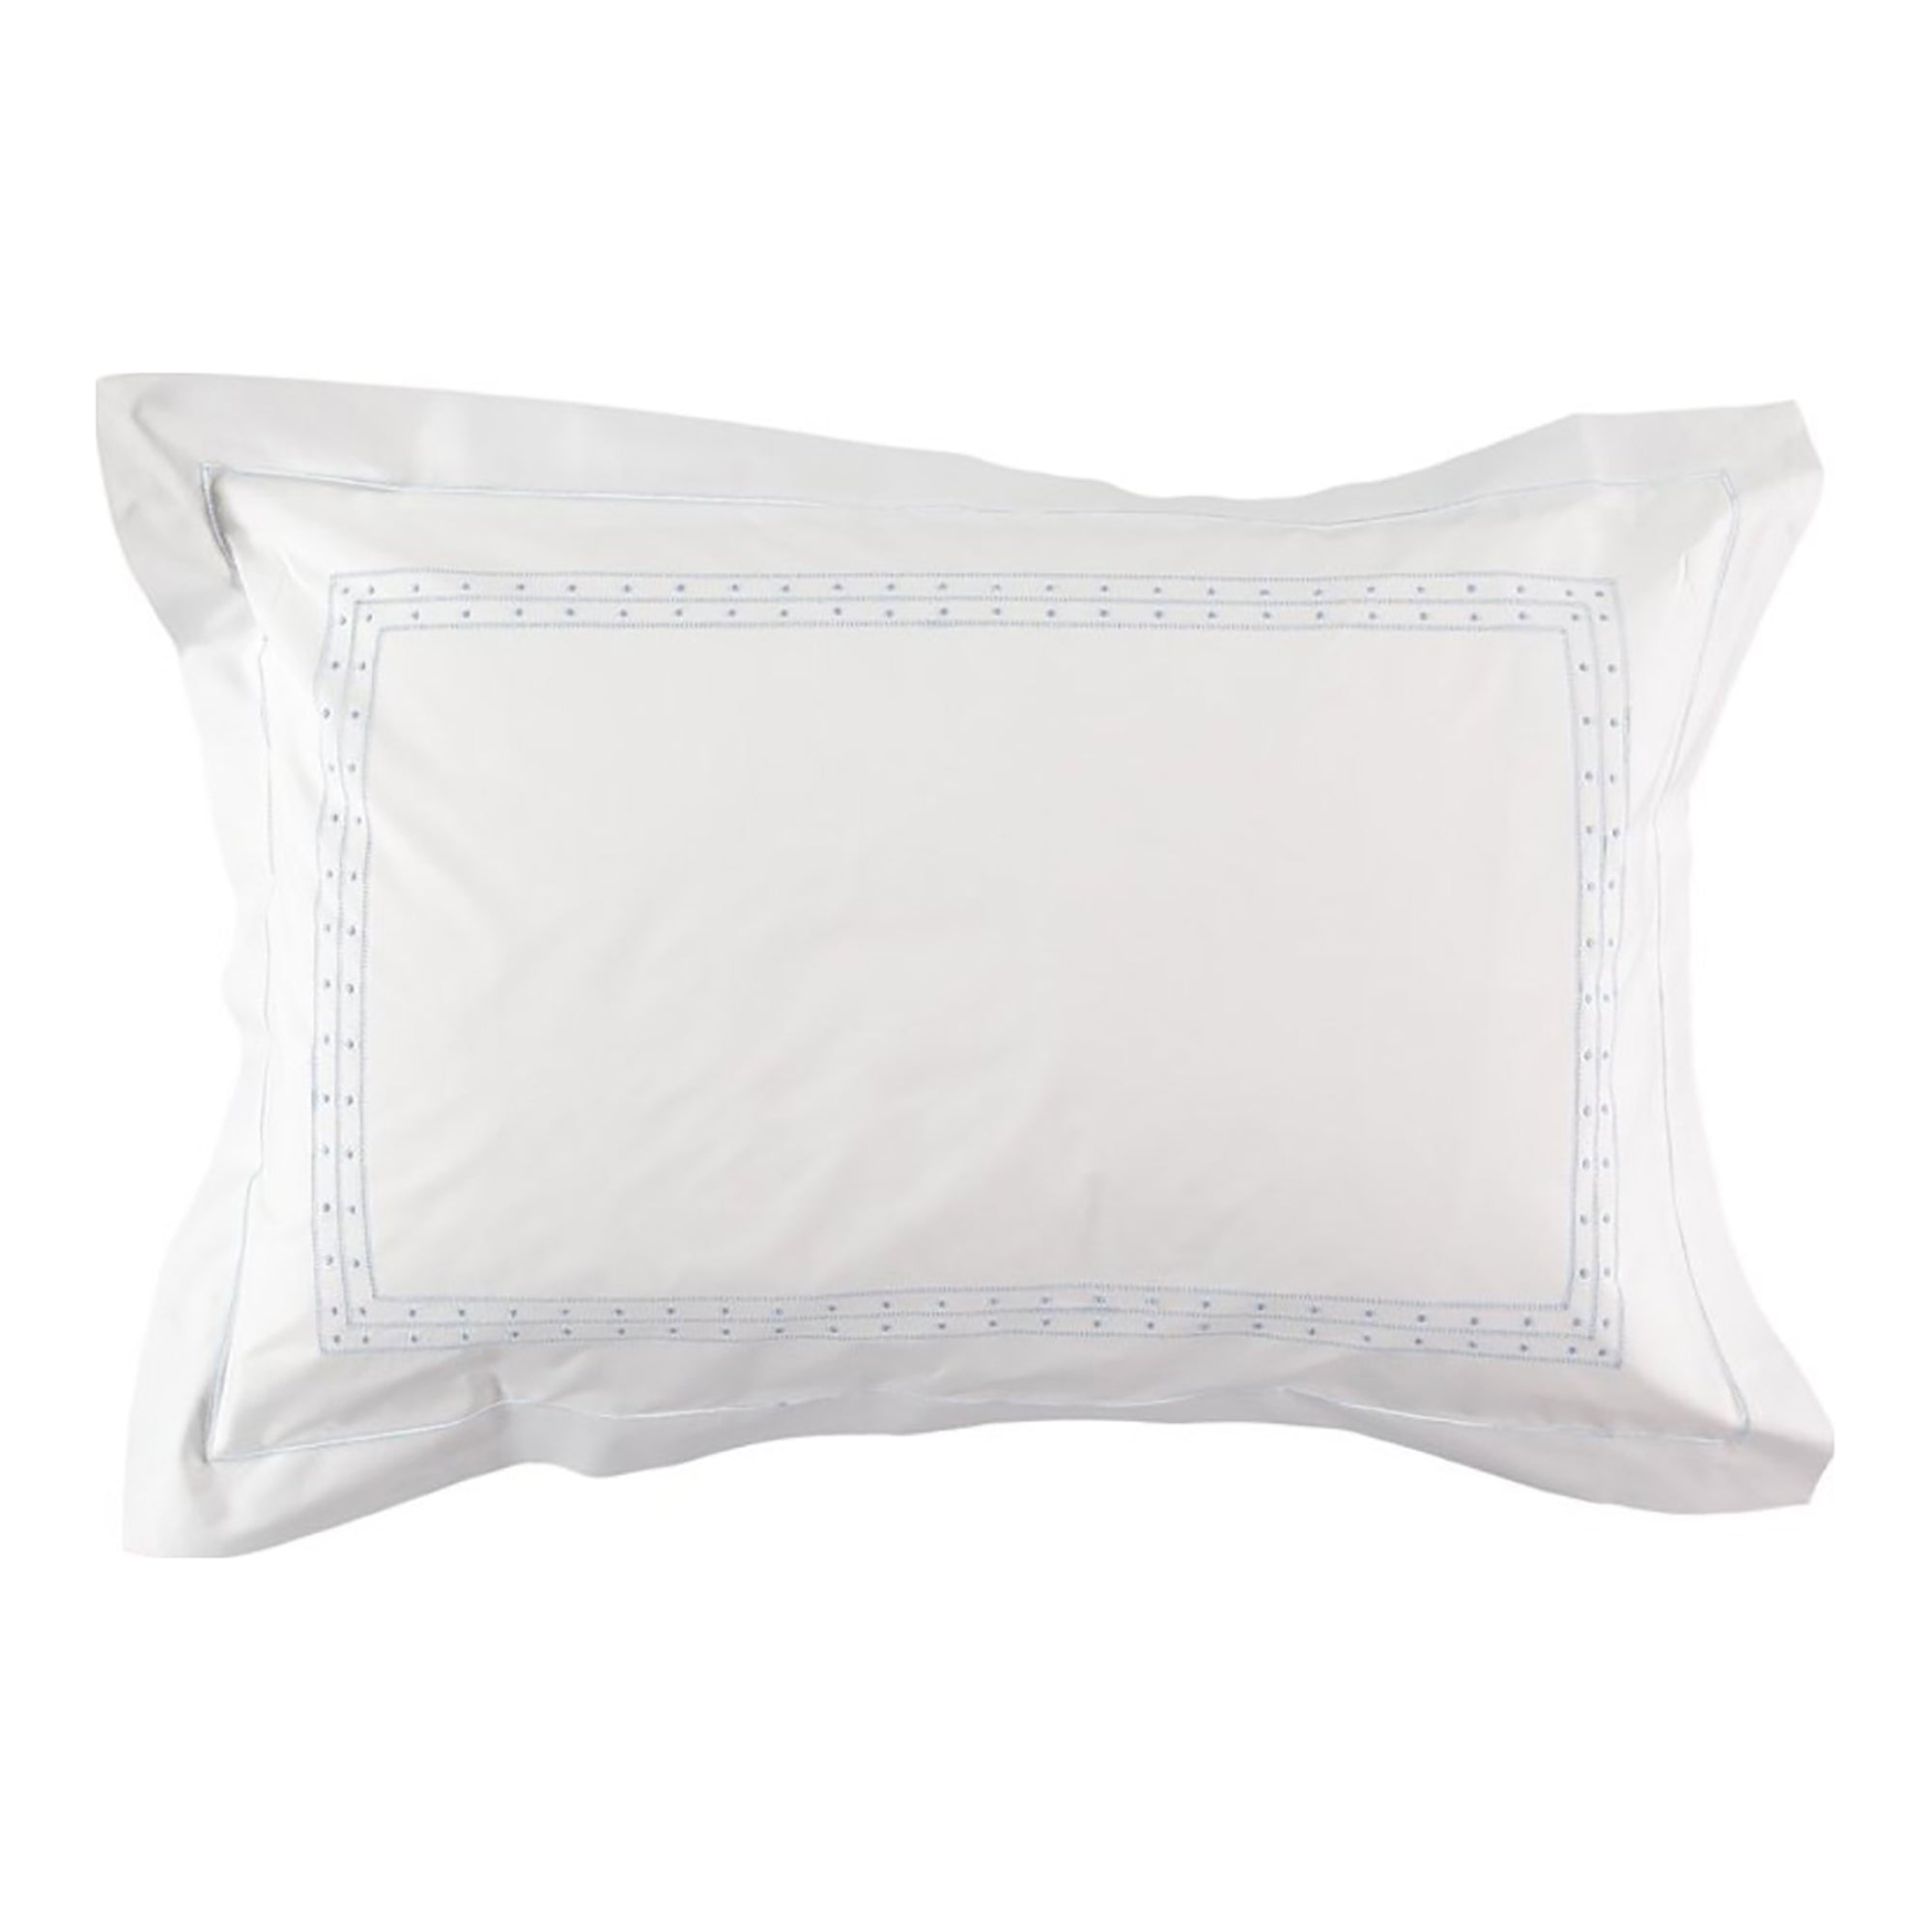 Matilda Blue Cotton Pillowcase - Super King Size